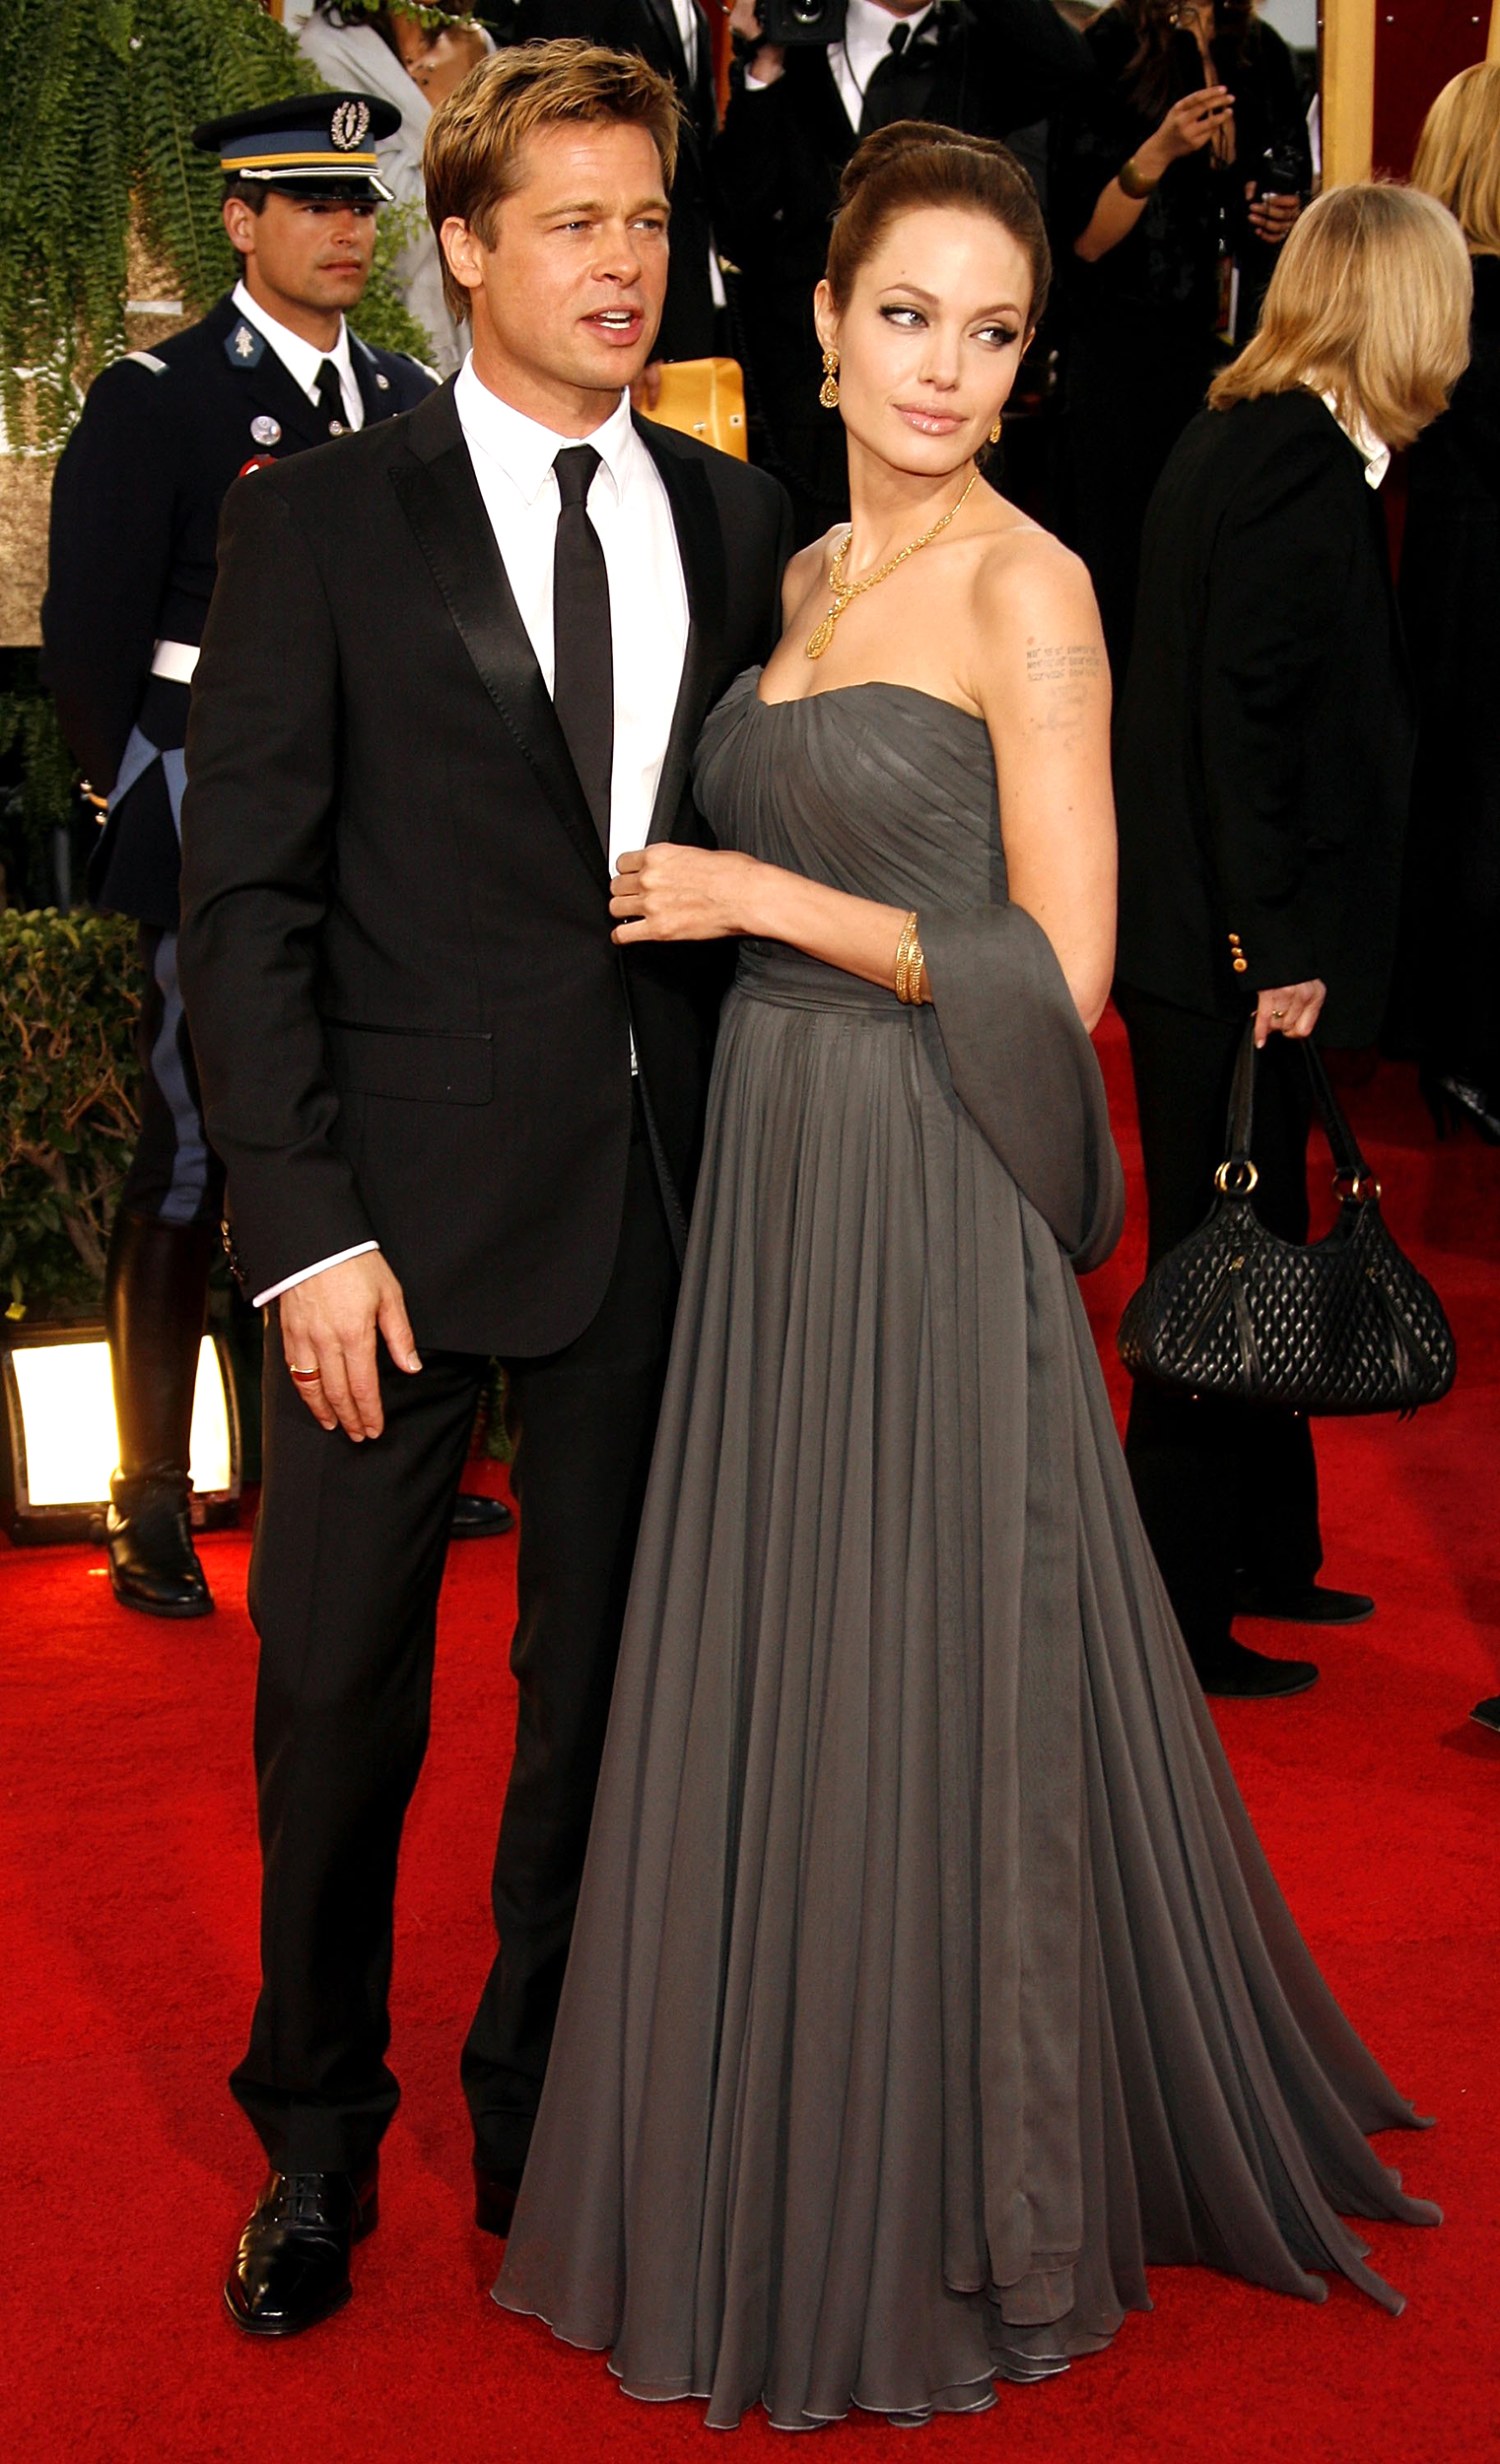 See Angelina Jolie and Brad Pitt's best red carpet looks